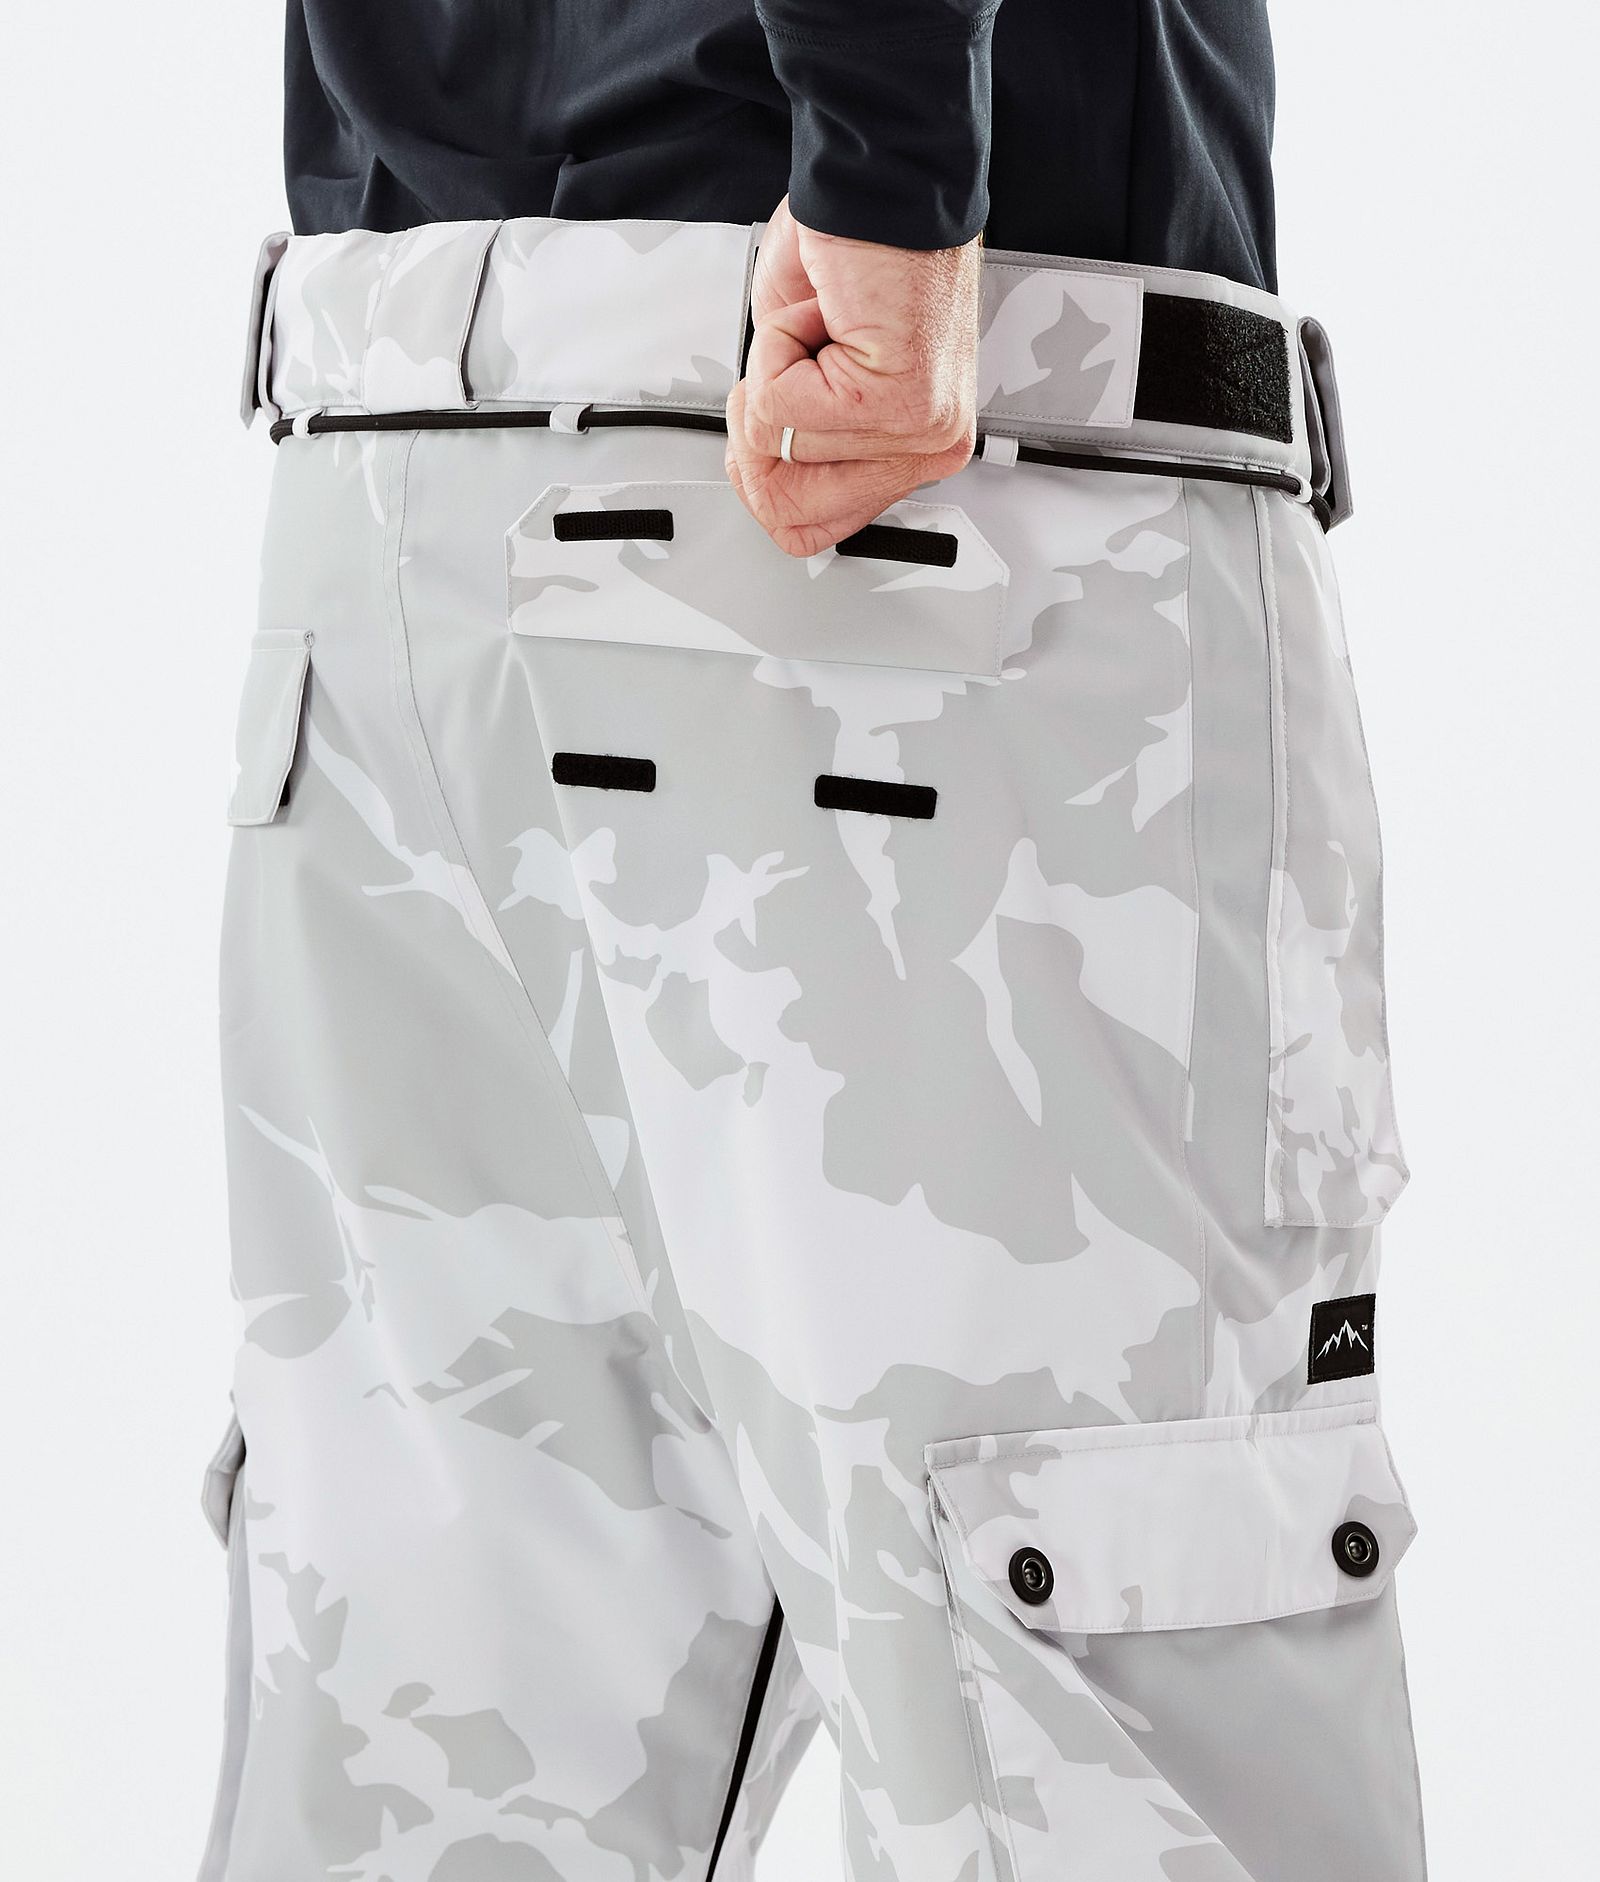 Dope Iconic Pantaloni Snowboard Uomo Grey Camo